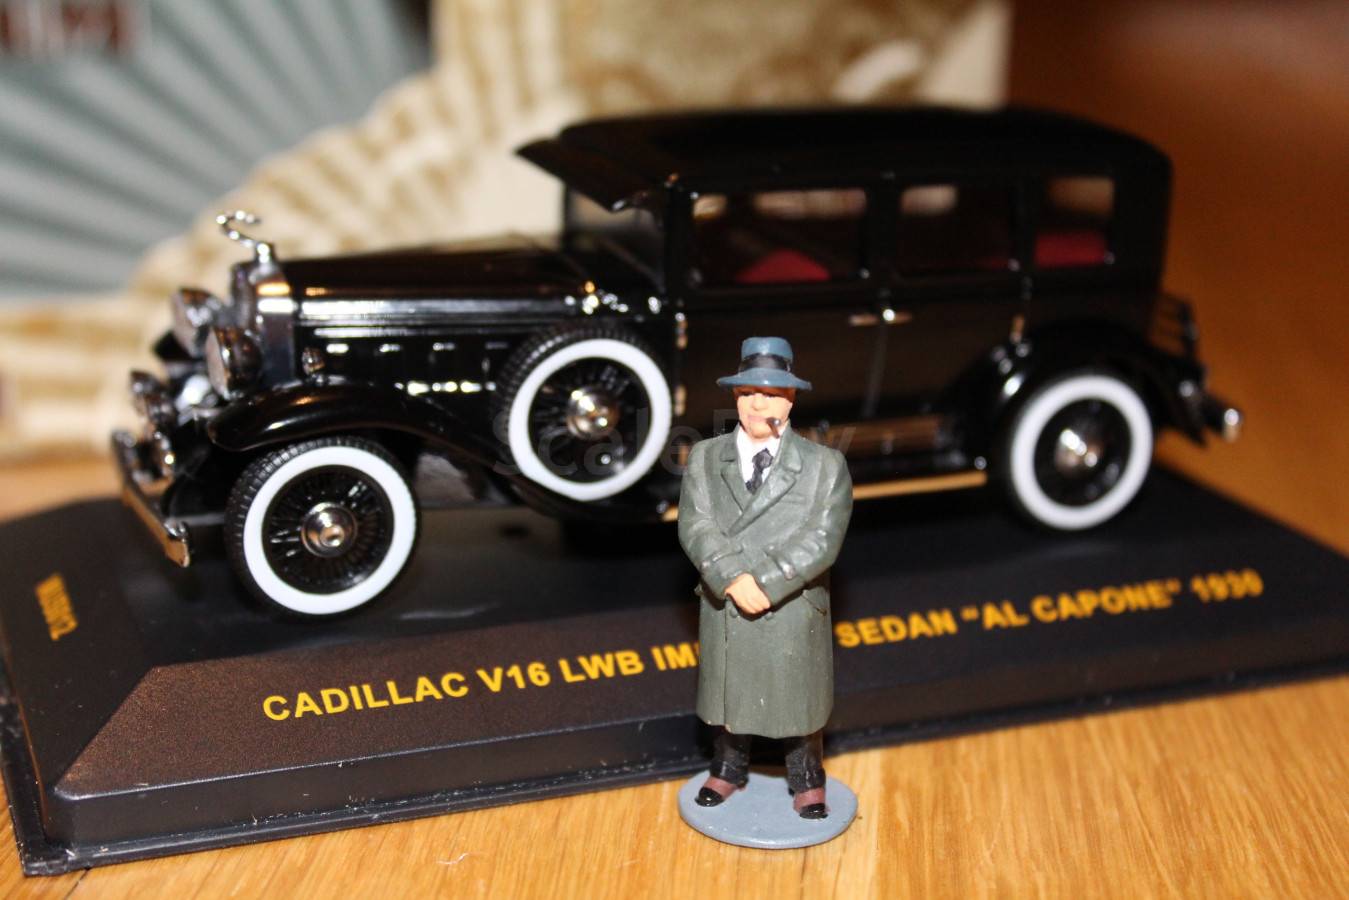 Al Kapone Figurka Al Capone Dlya Modeli Cadillac V16 Lwb Imperial Sedan Aukcion Masshtabnyh I Sbornyh Modelej